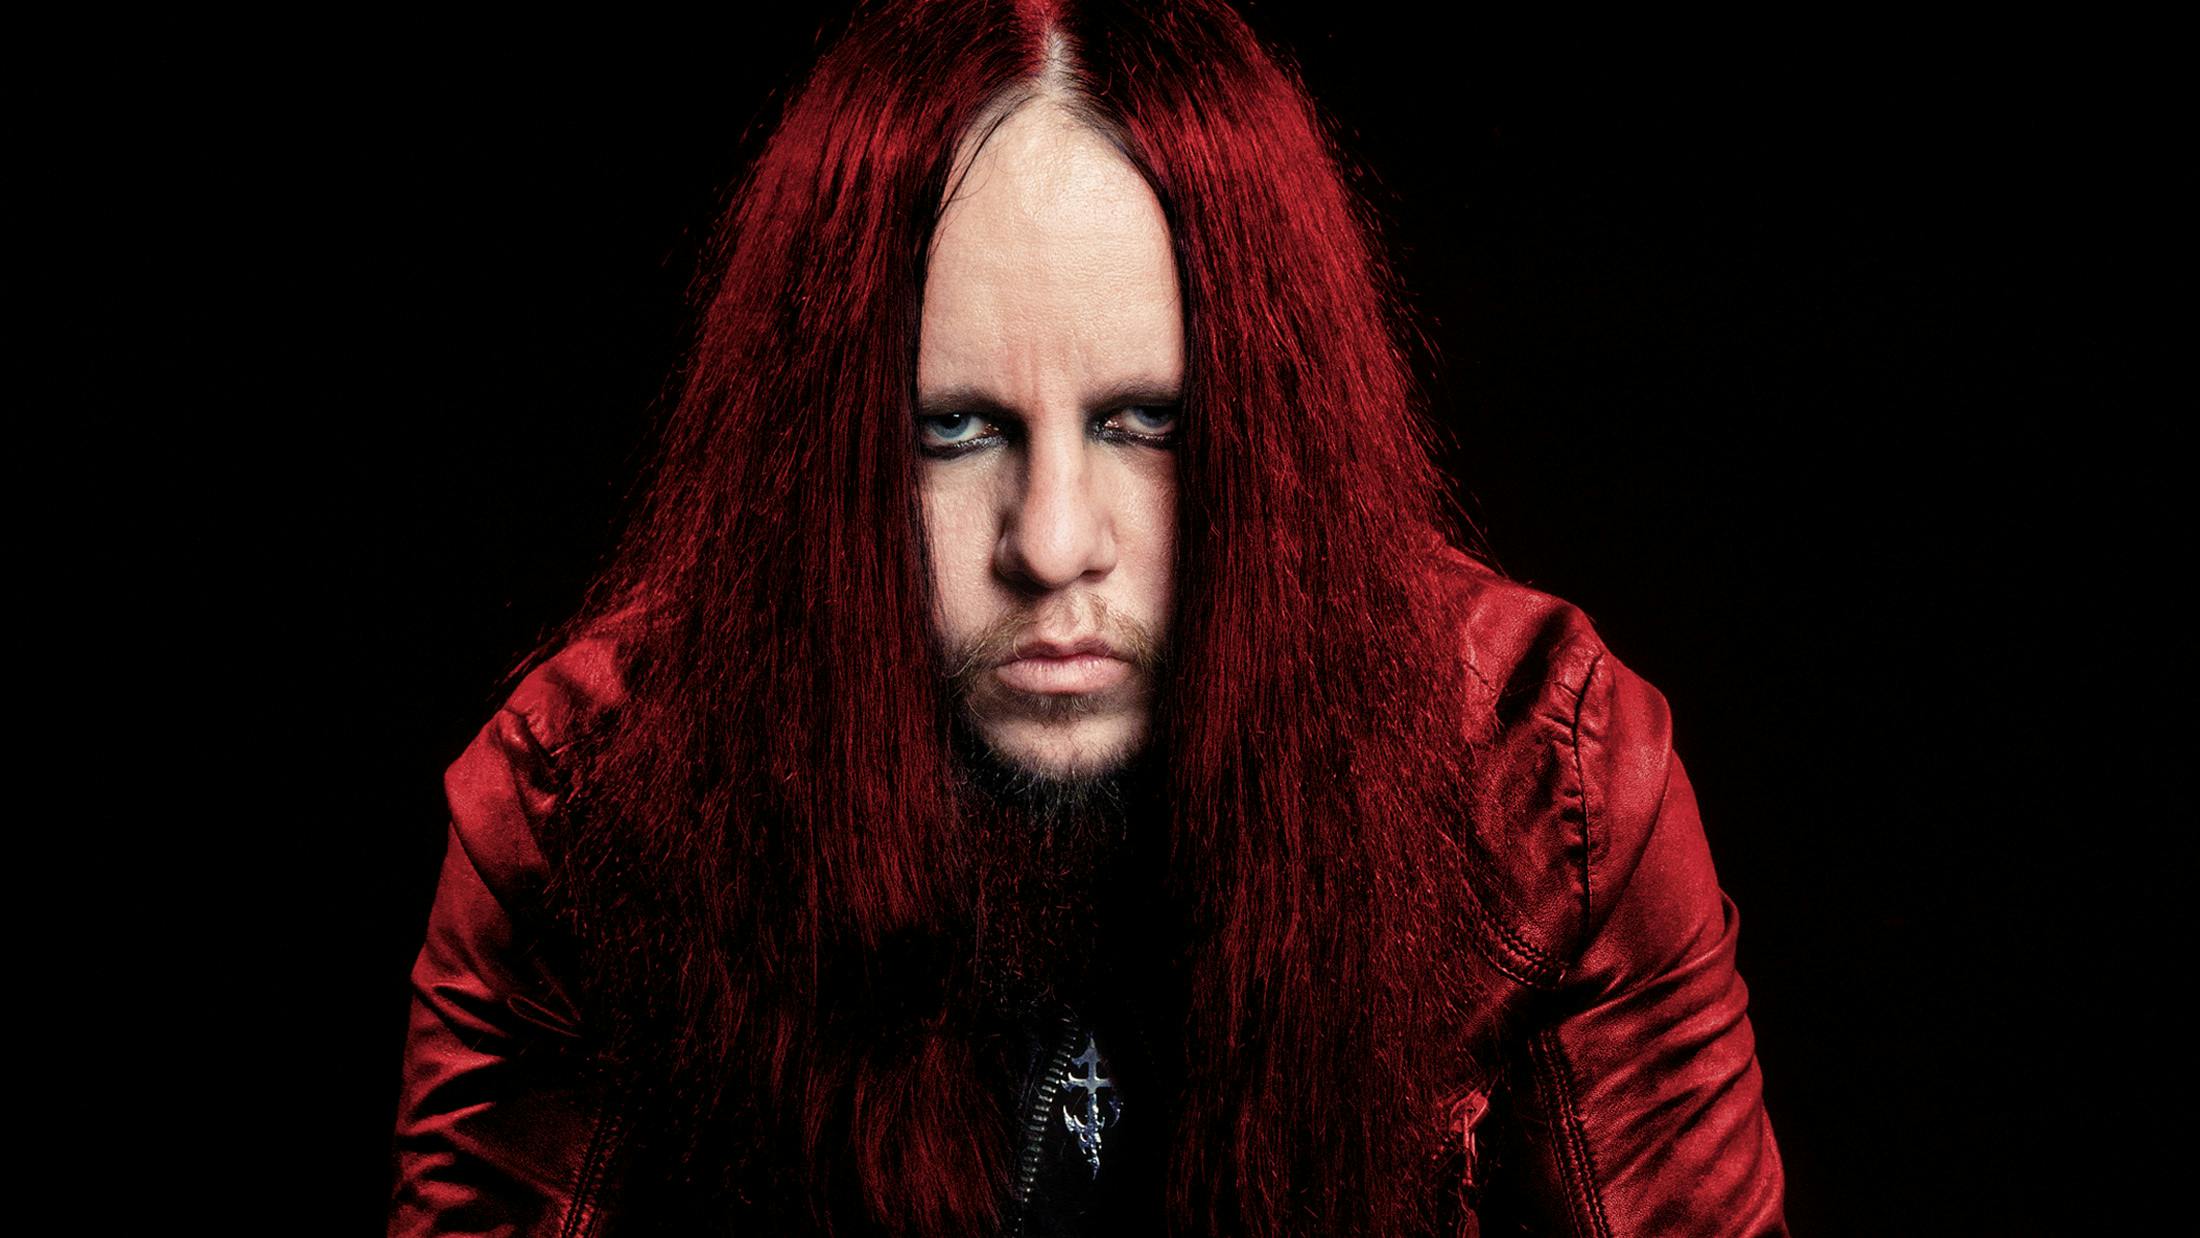 Joey Jordison was snubbed in the GRAMMYs’ In Memoriam video segment